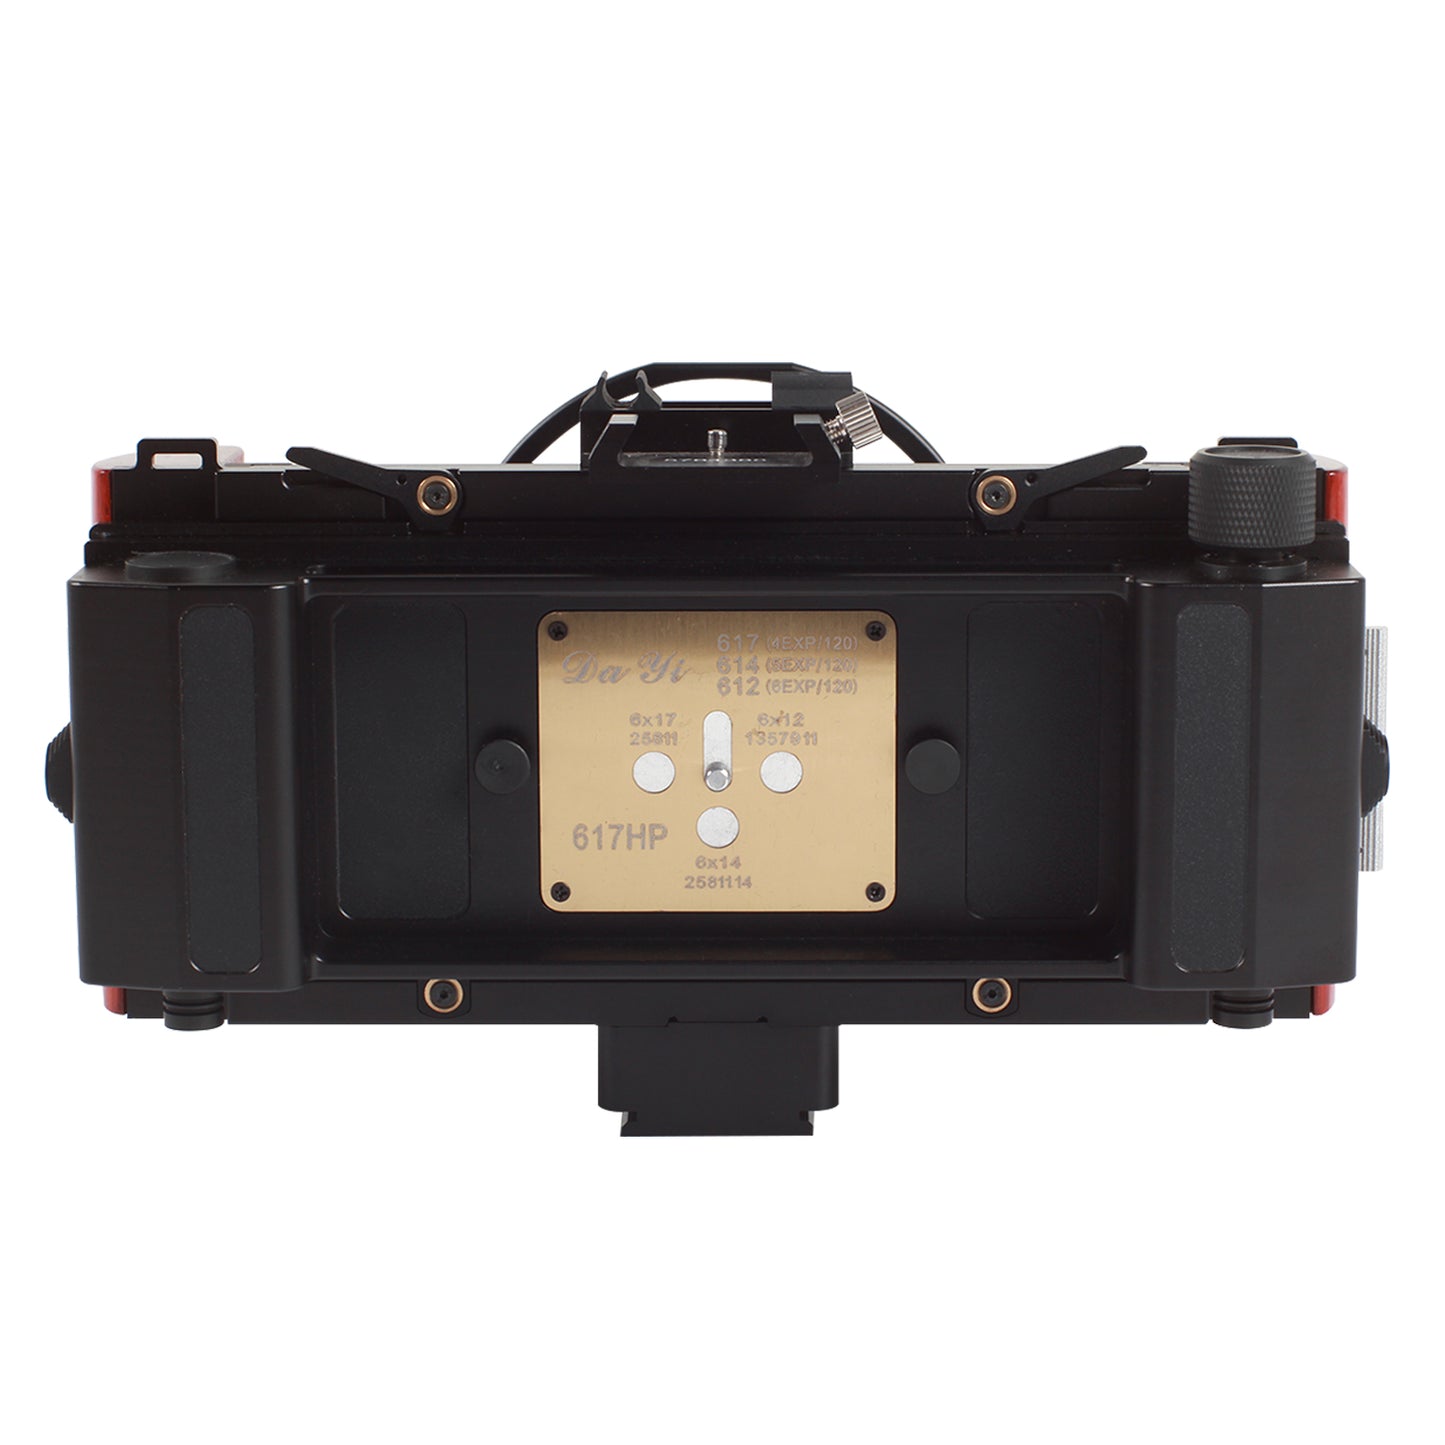 New Professional DAYI S-IIA 6x17 6x14 6x12 Multi Format Panorama Shift Camera